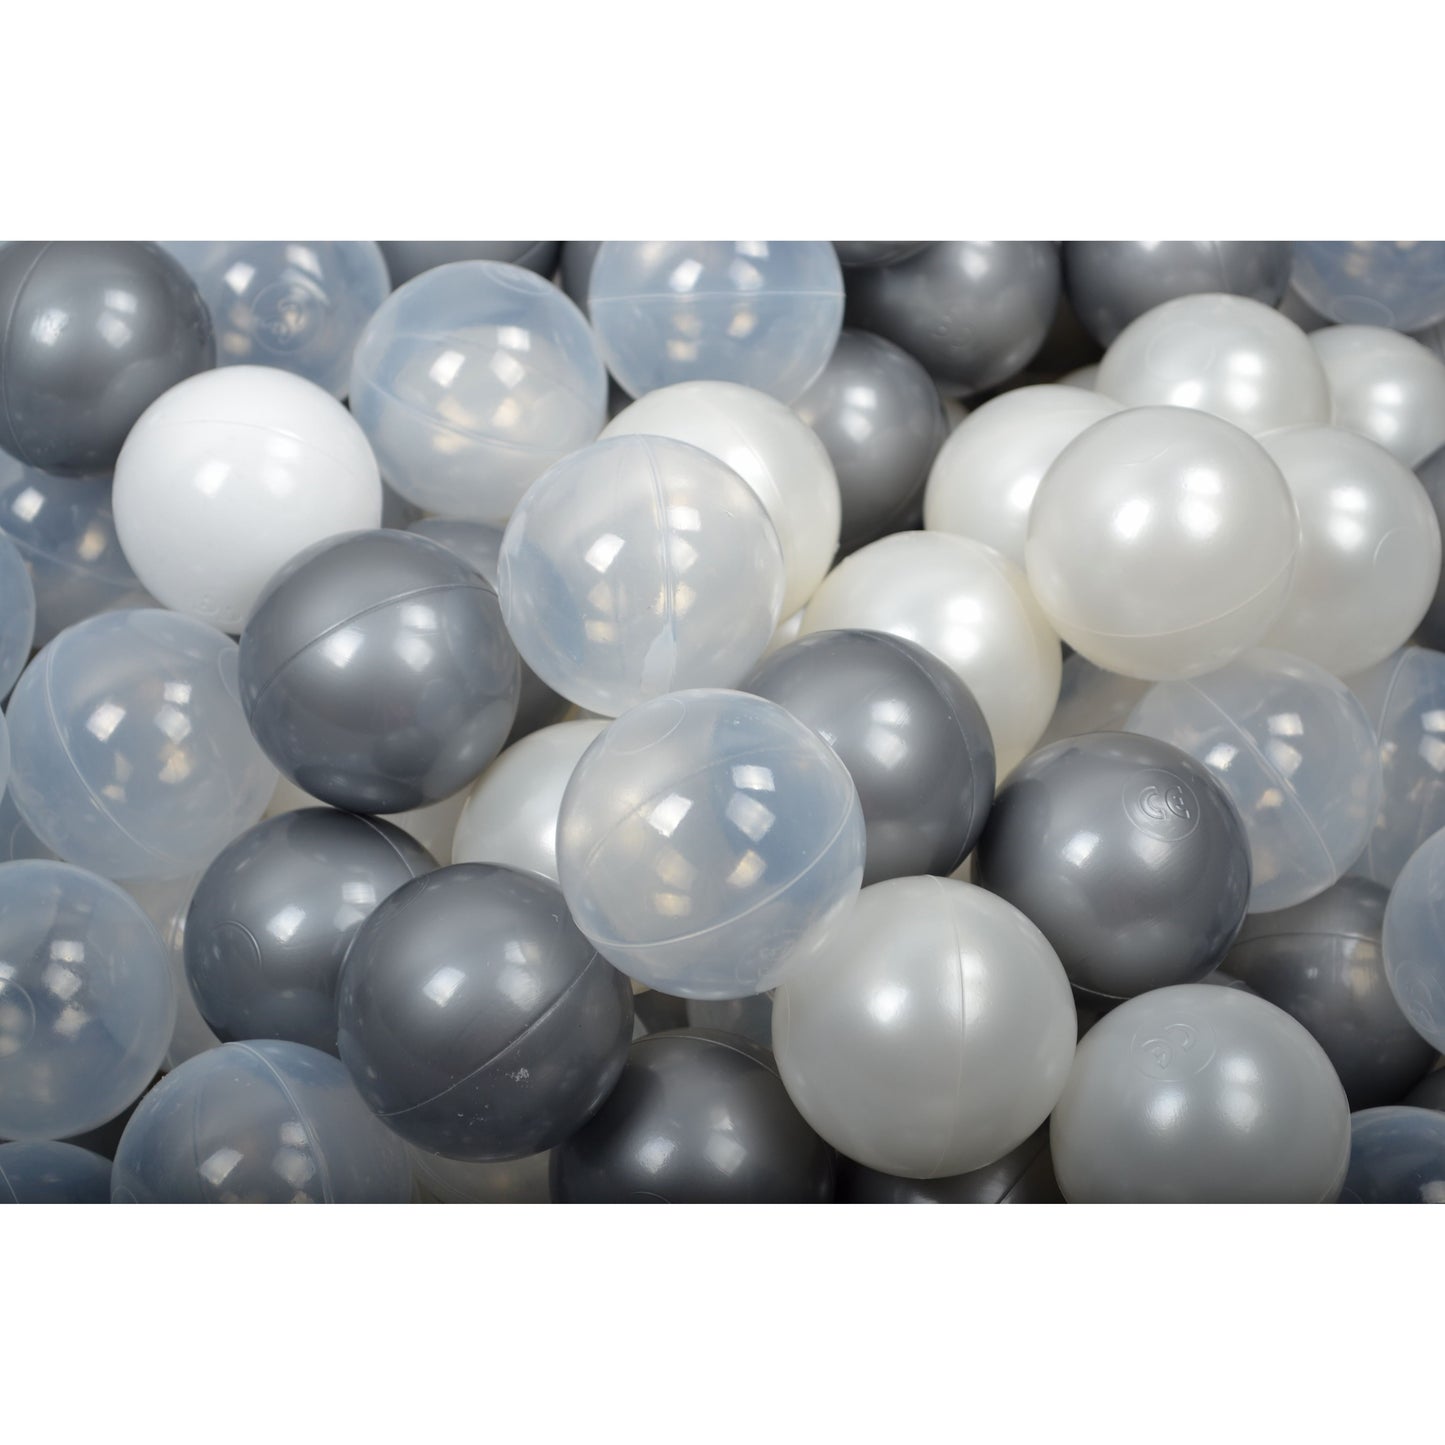 Velvet Corduroy Blue Marine Round Foam Ball Pit - Select Your Own Balls